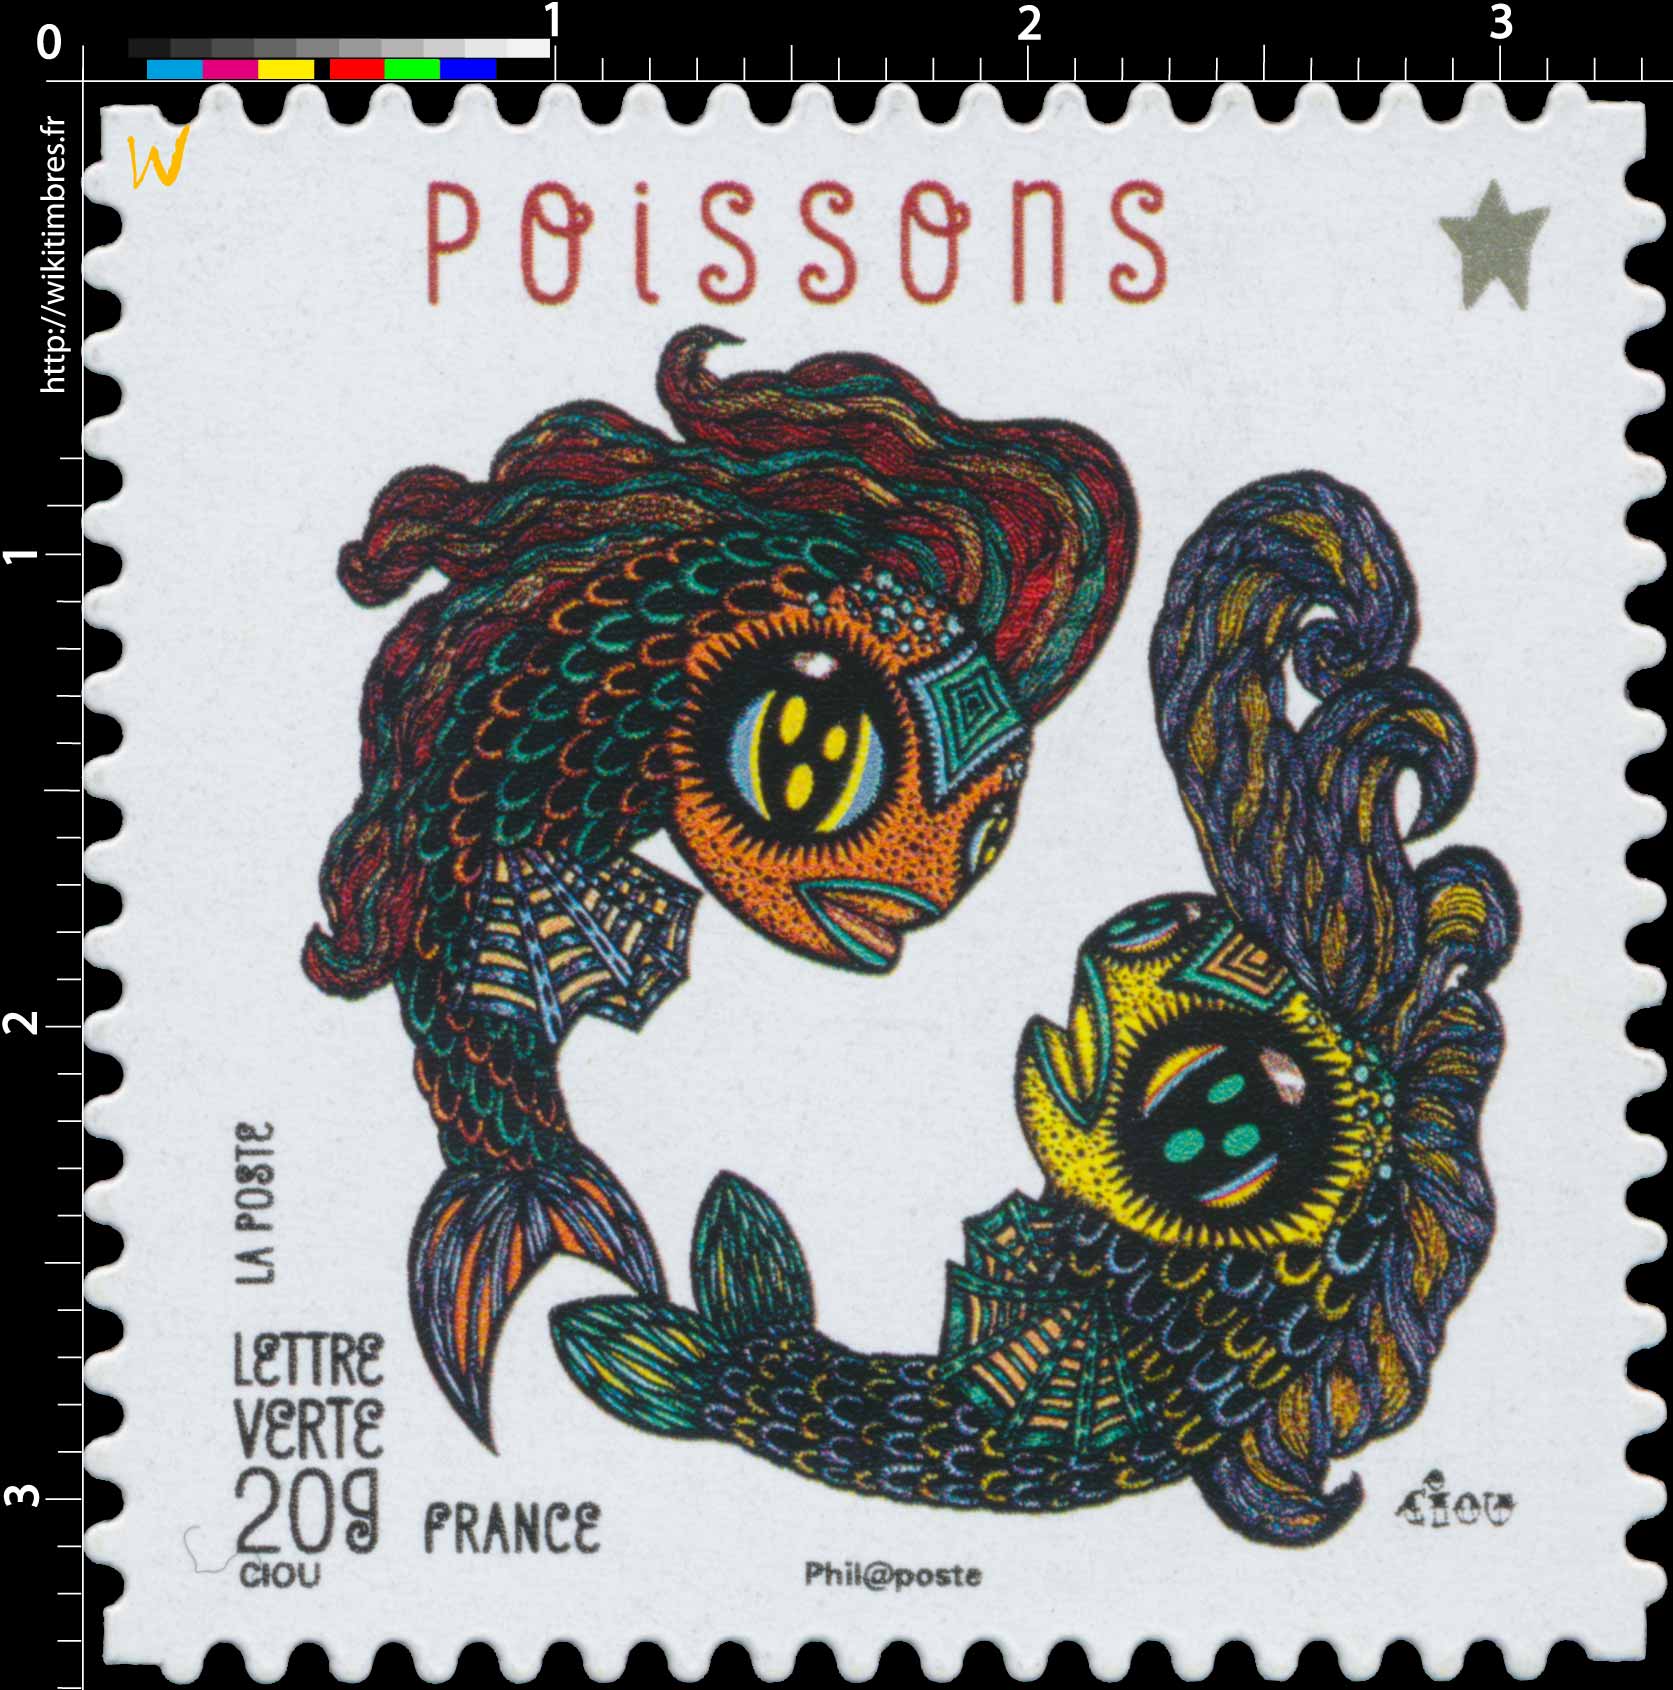 2014 Poissons